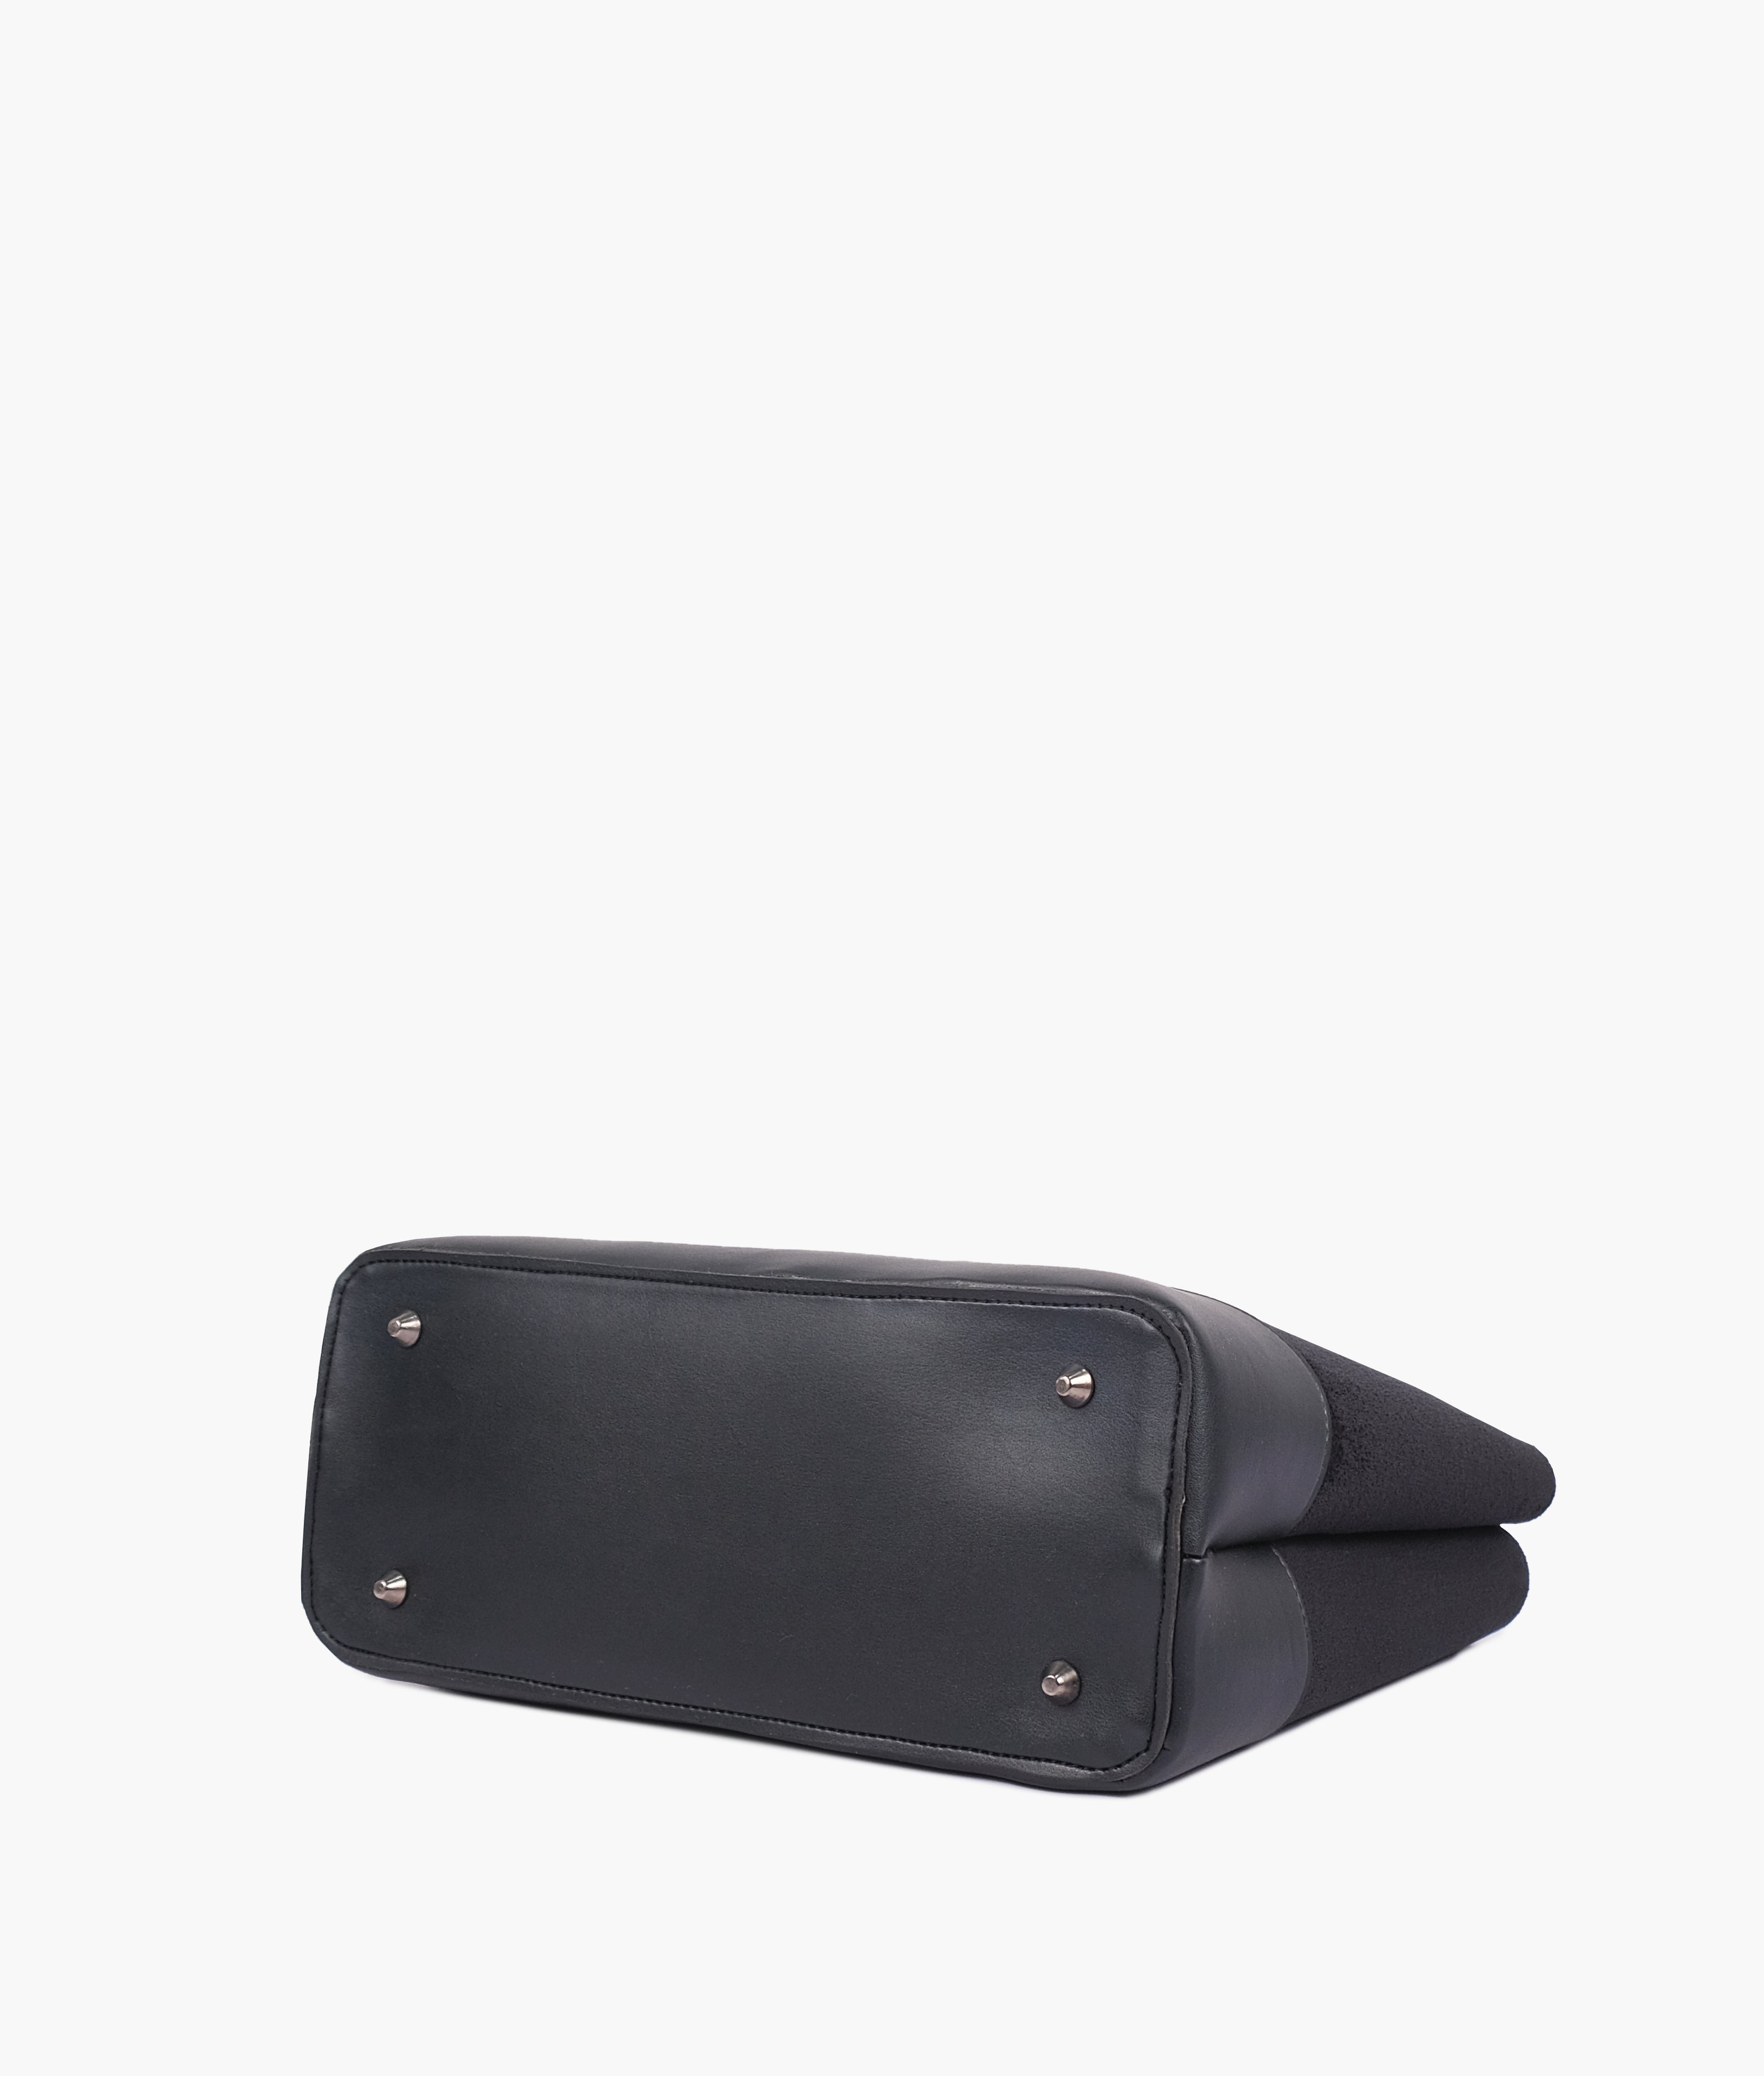 Black suede multi-compartment shoulder bag